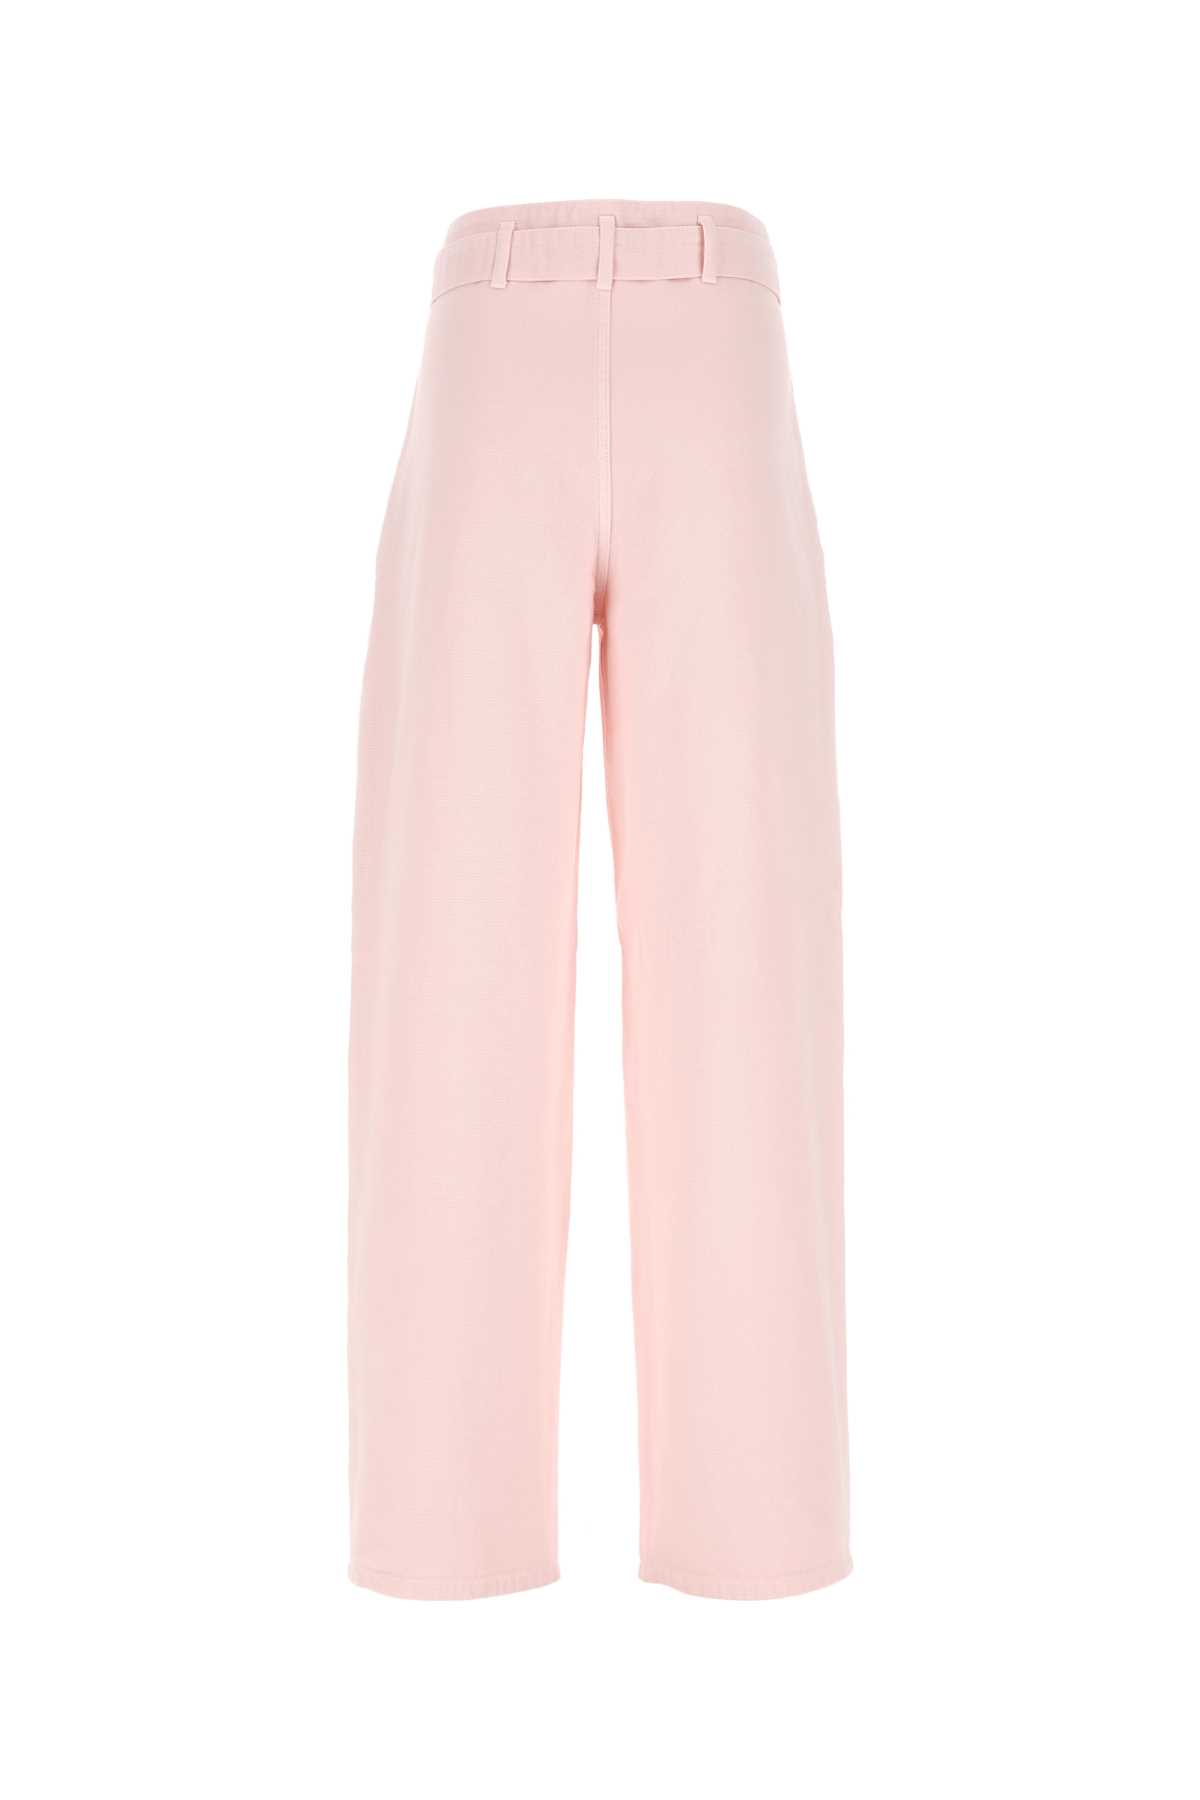 Shop Philosophy Di Lorenzo Serafini Light Pink Cotton Pant